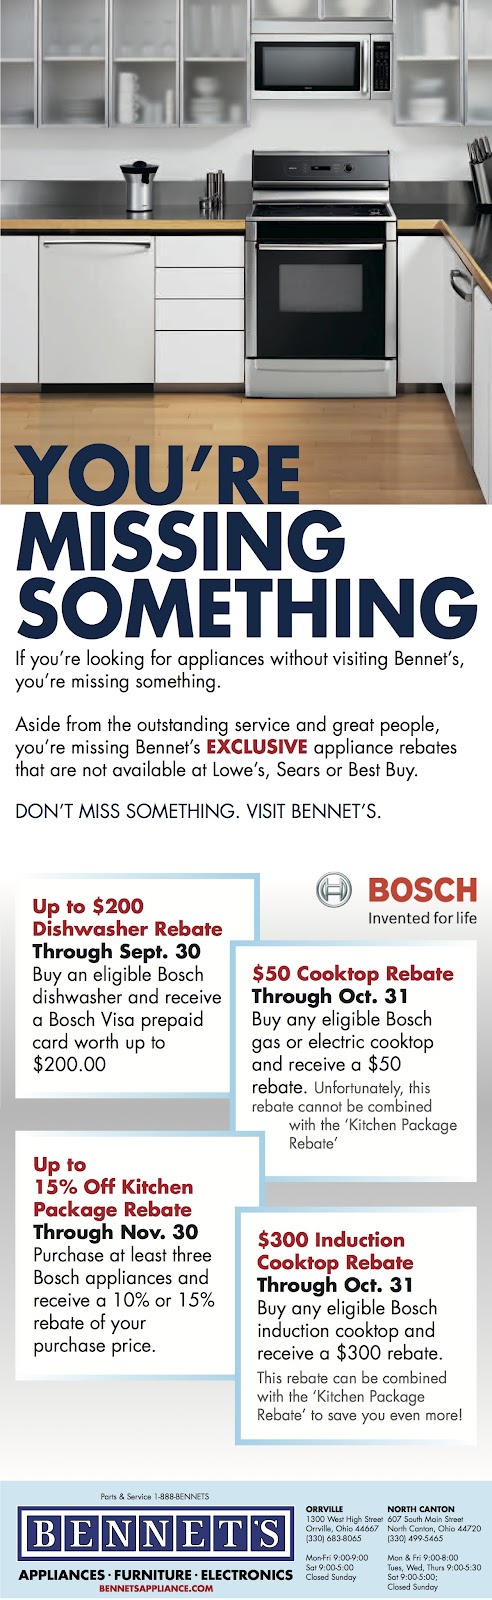 bennet-s-appliance-centers-orrville-ohio-bosch-kitchen-appliances